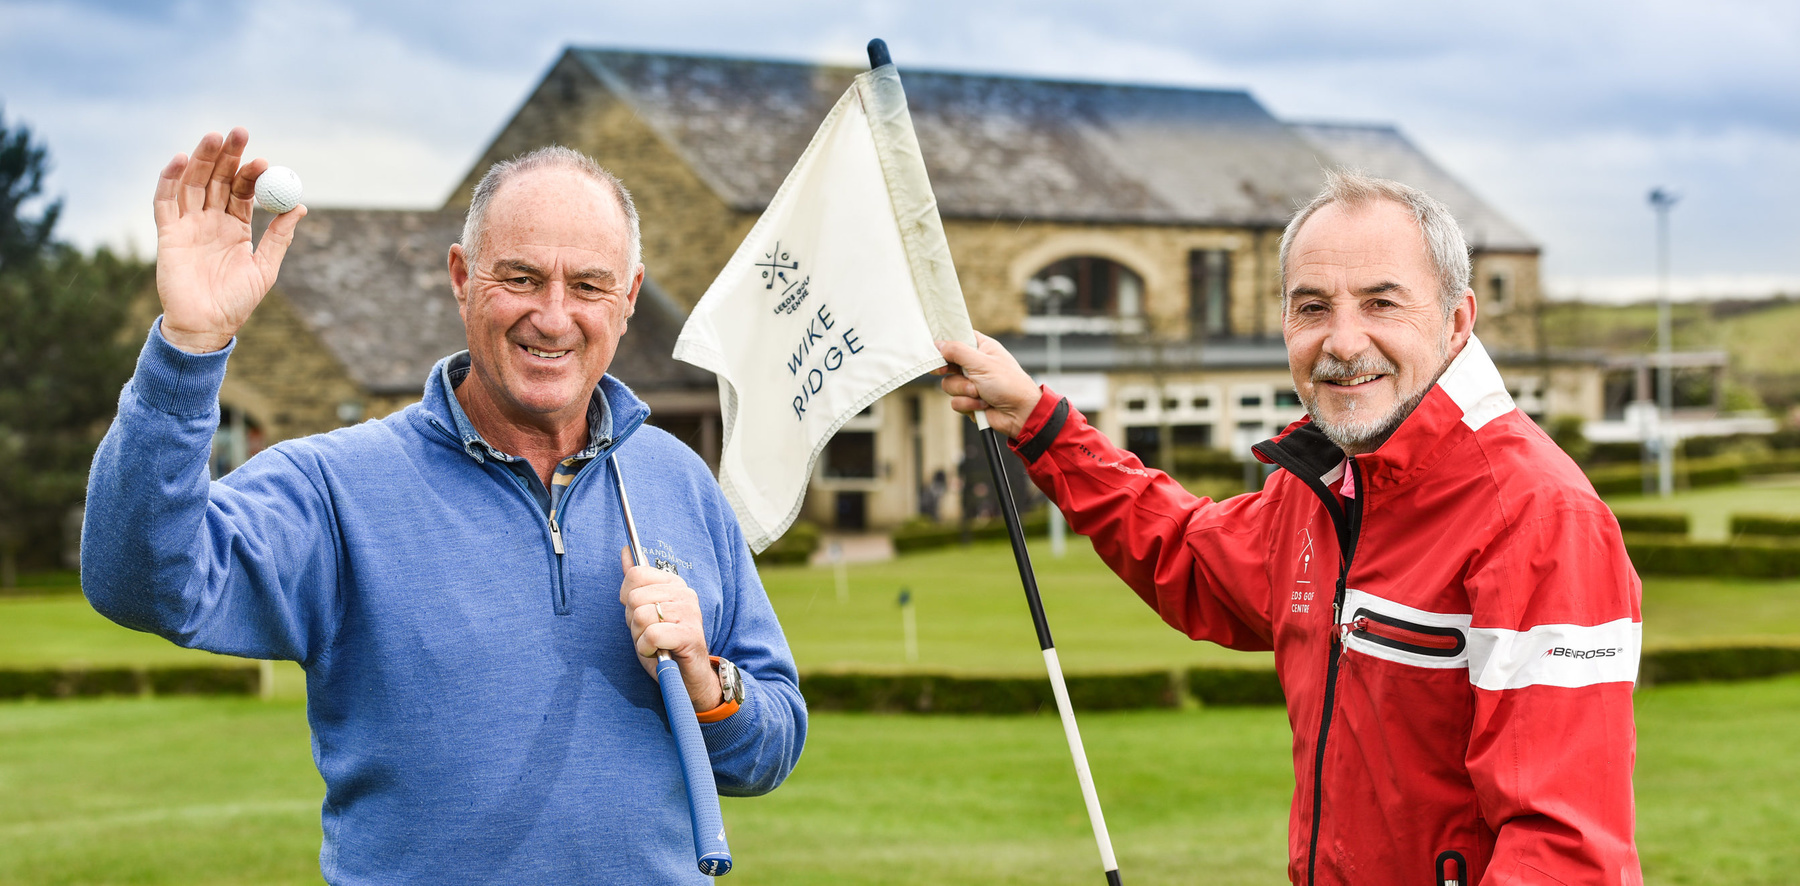 Gordan J Brand and Nigel Sweet from Leeds Golf Centre